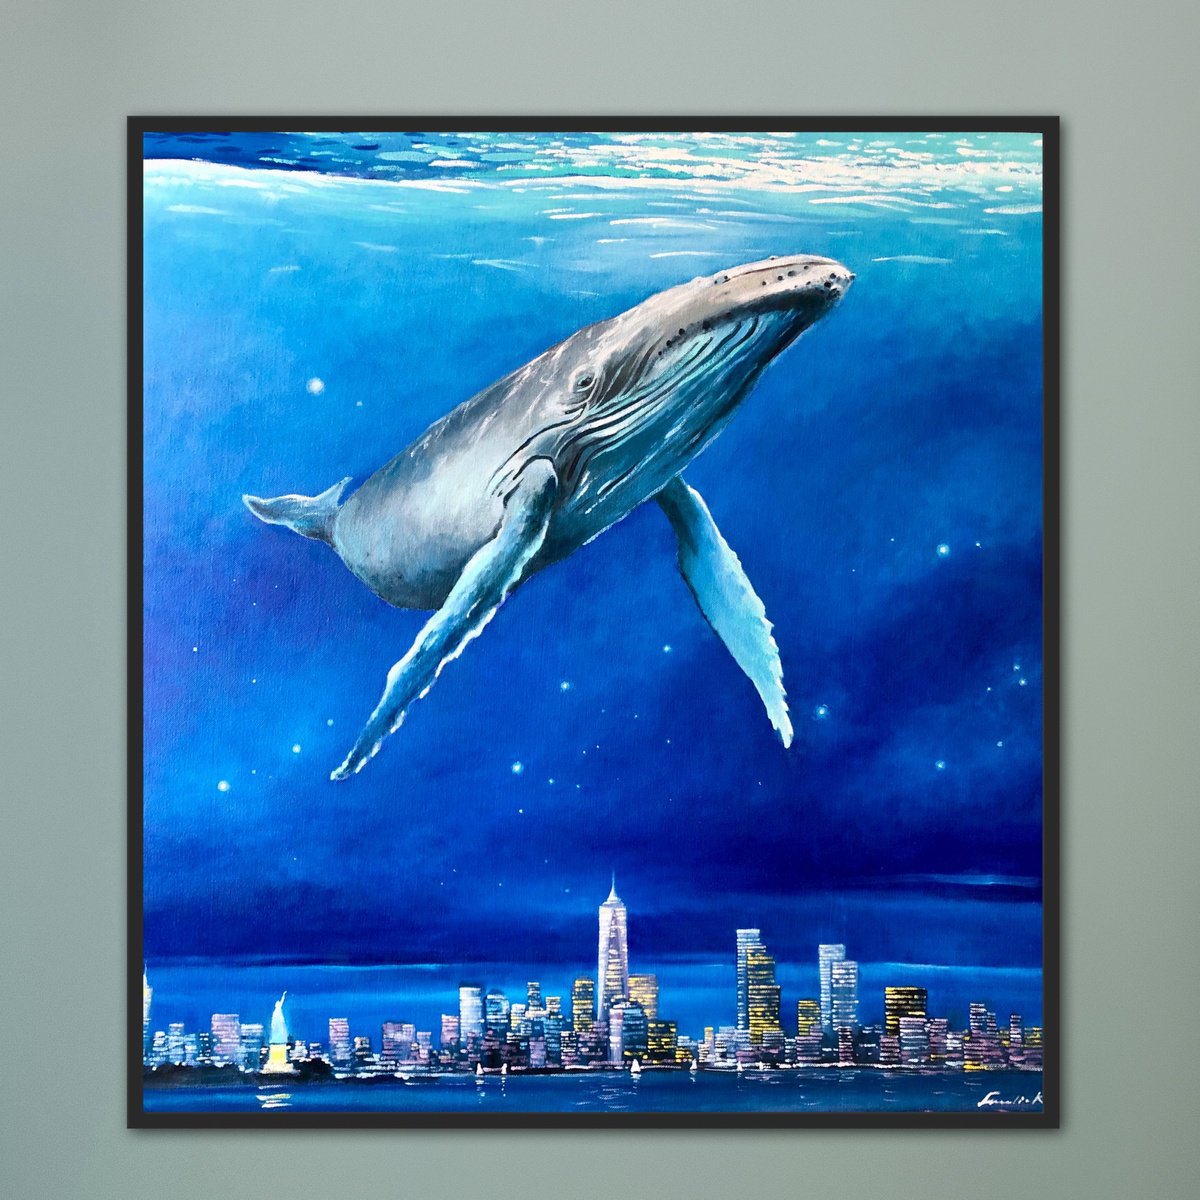 Whale over NY by Volodymyr Smoliak